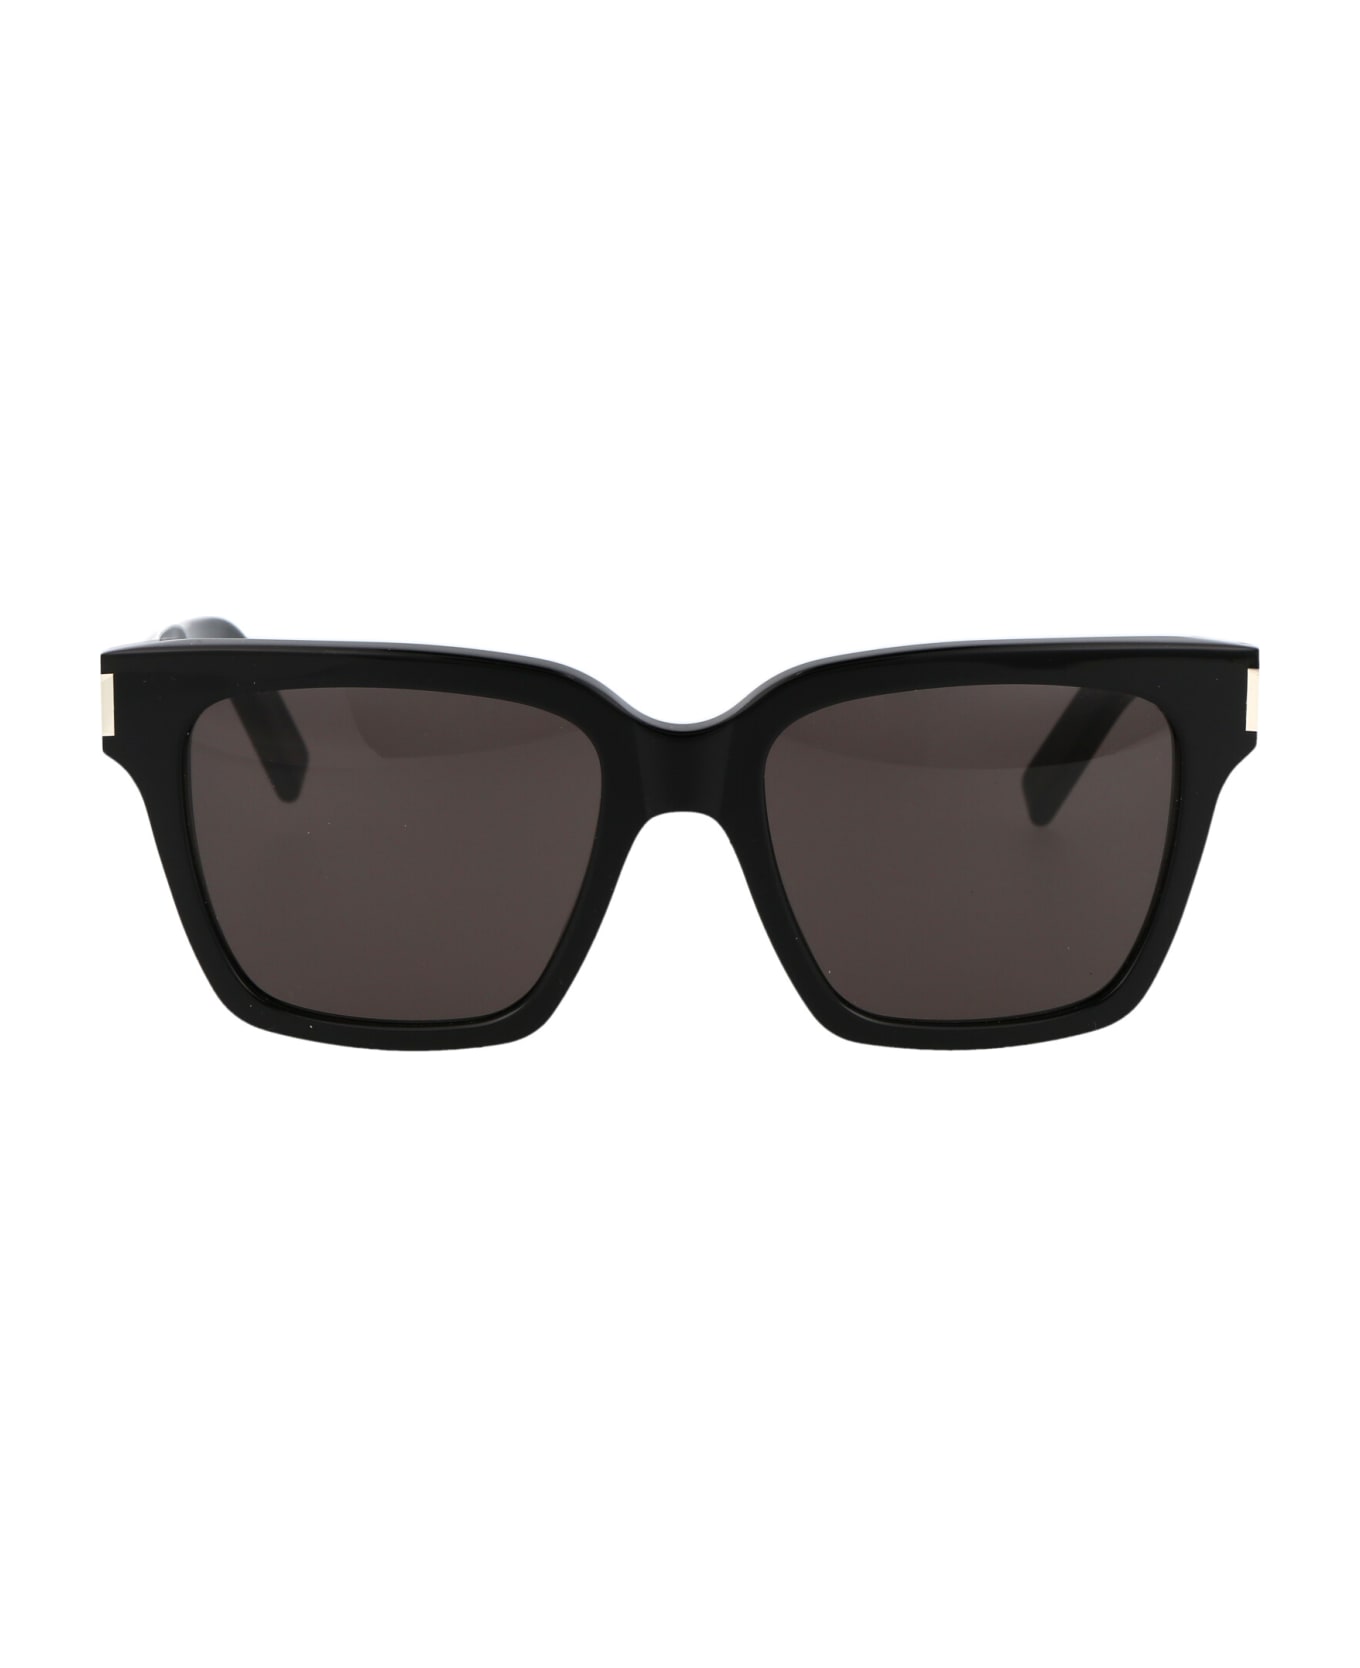 Saint Laurent Eyewear Sl 507 Sunglasses - 001 BLACK BLACK GREY